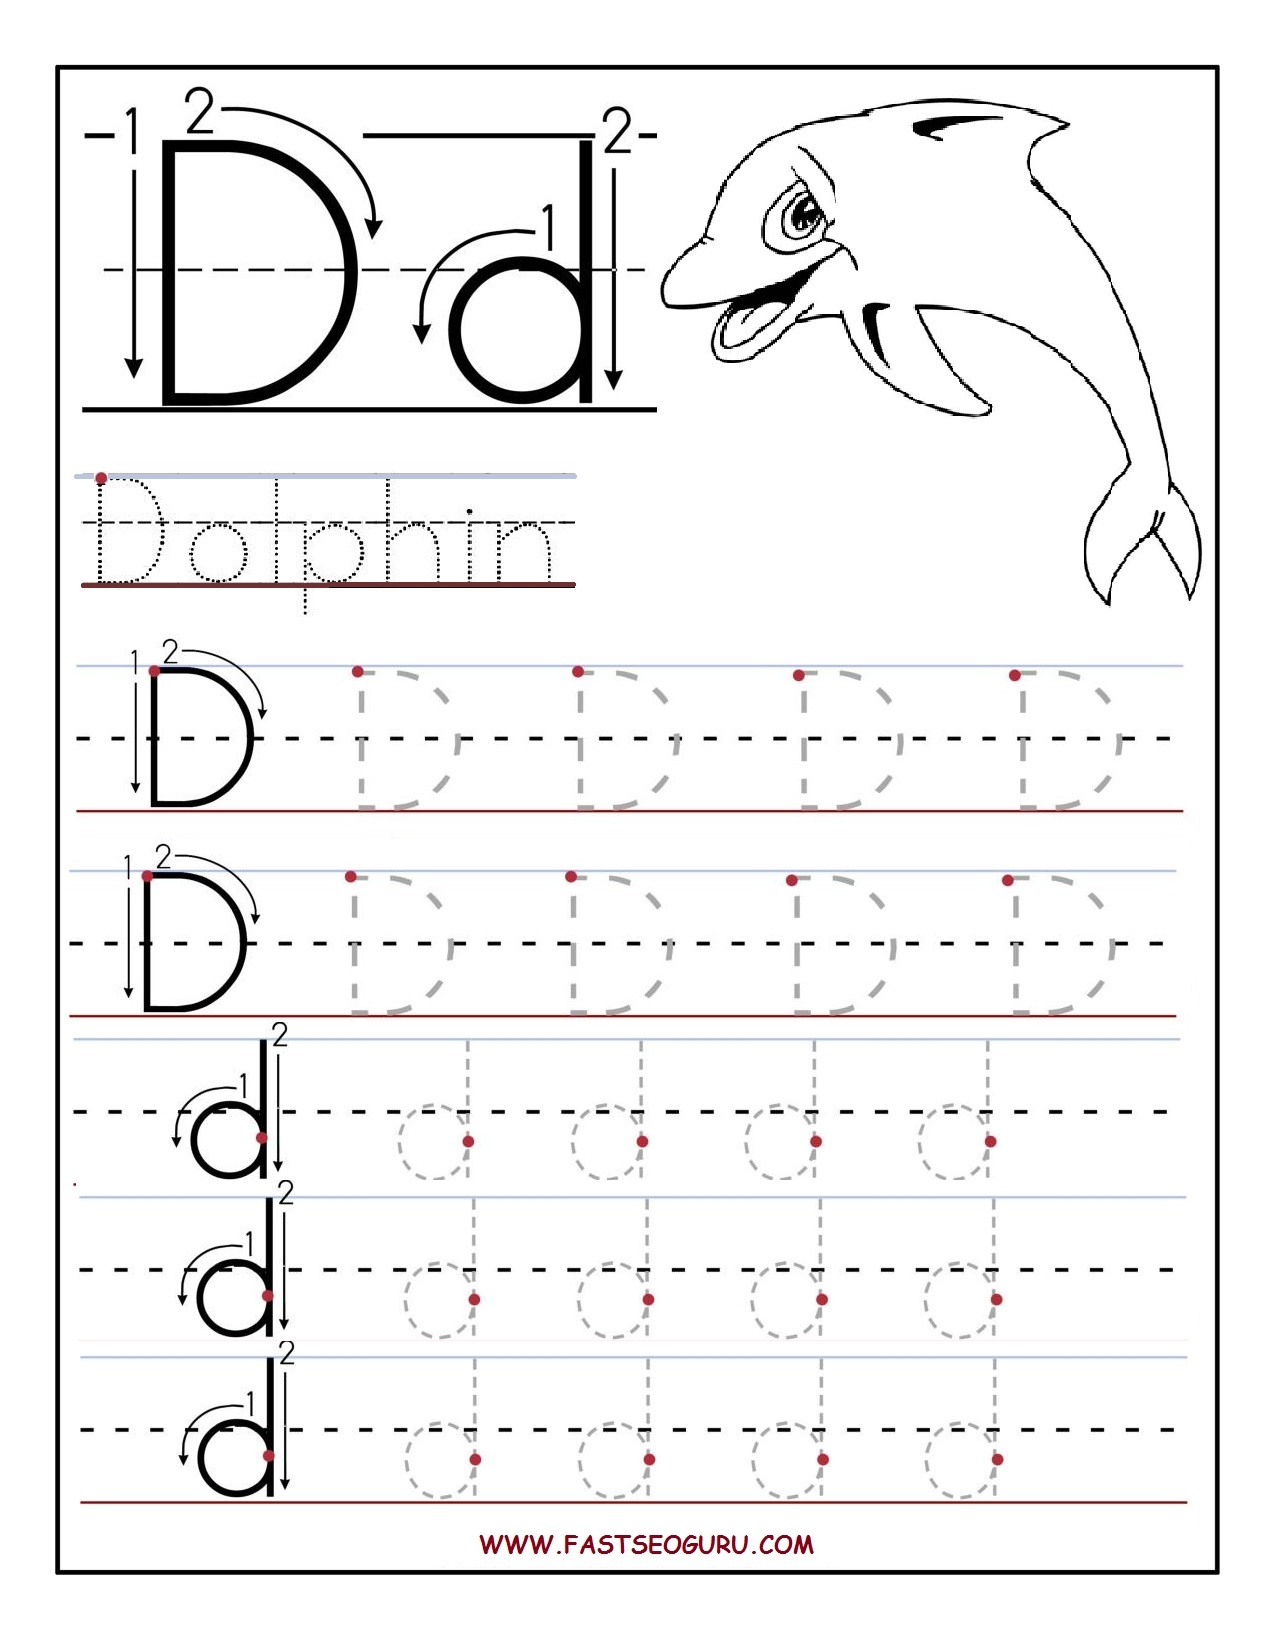 tracing-letter-d-alphabet-worksheet-free-printable-pdf